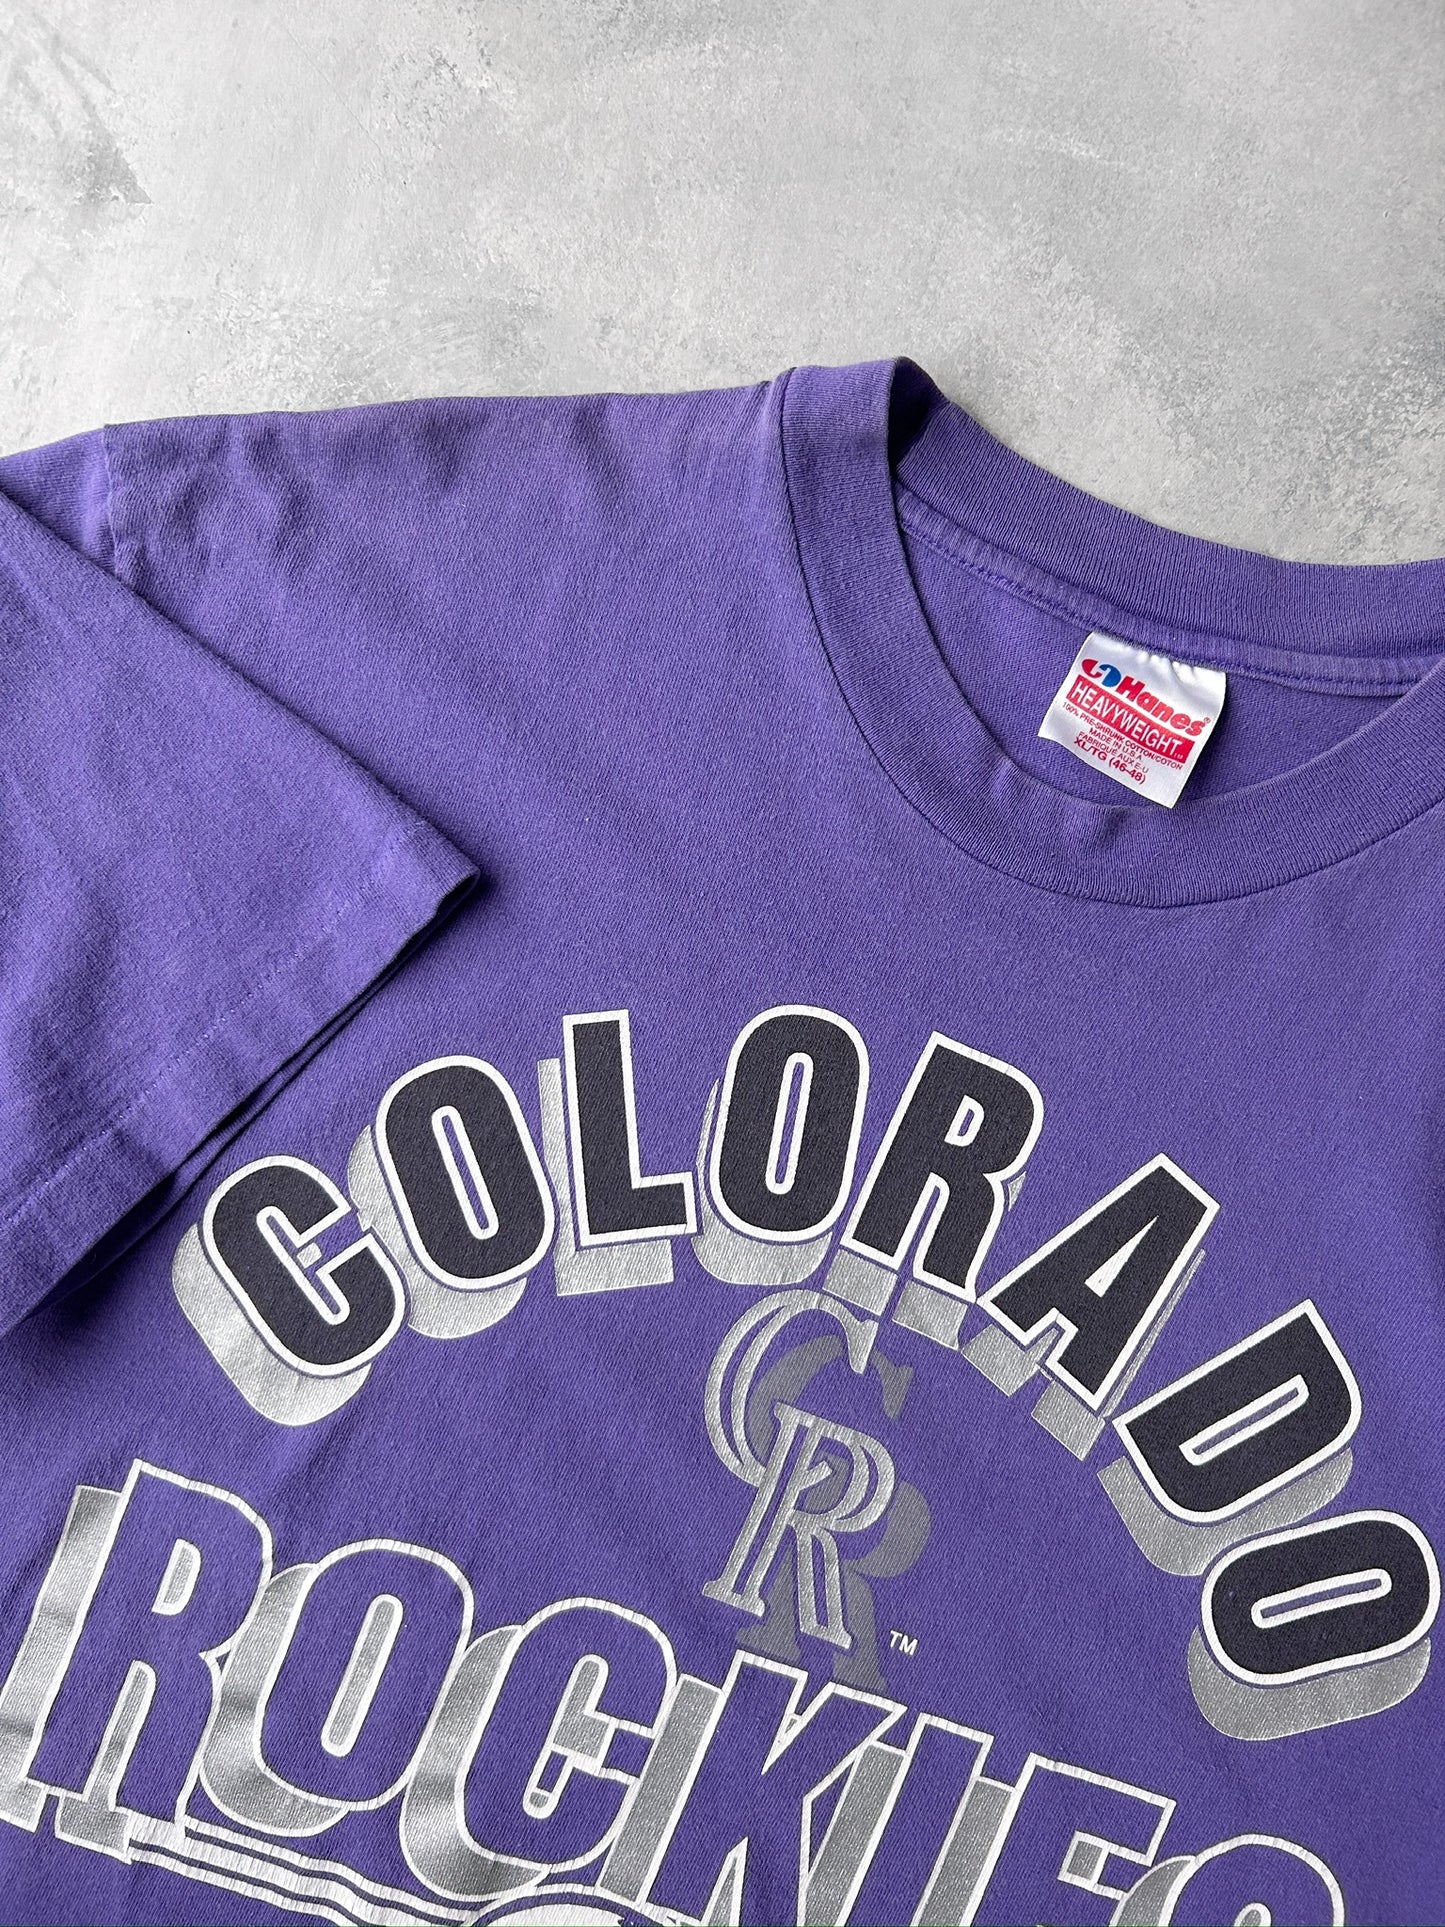 Colorado Rockies T-Shirt '92 - XL